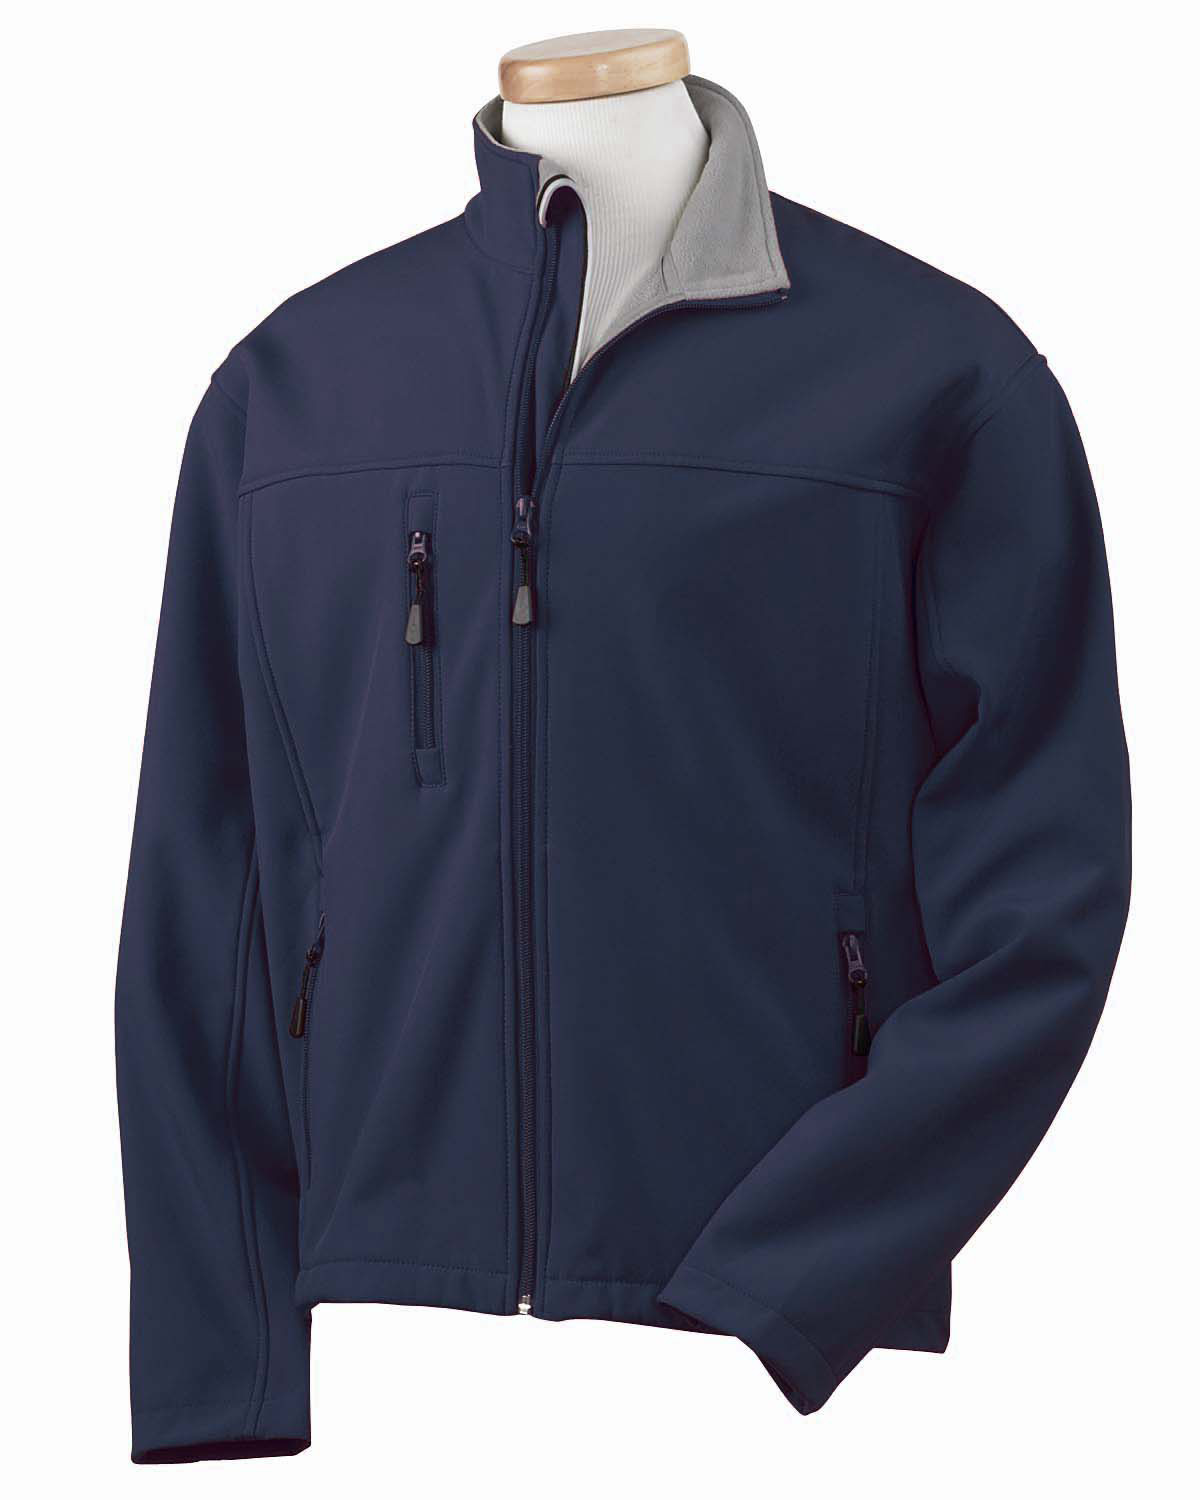 Devon & Jones D995 - Men's Soft Shell Jacket $46.92 - Outerwear